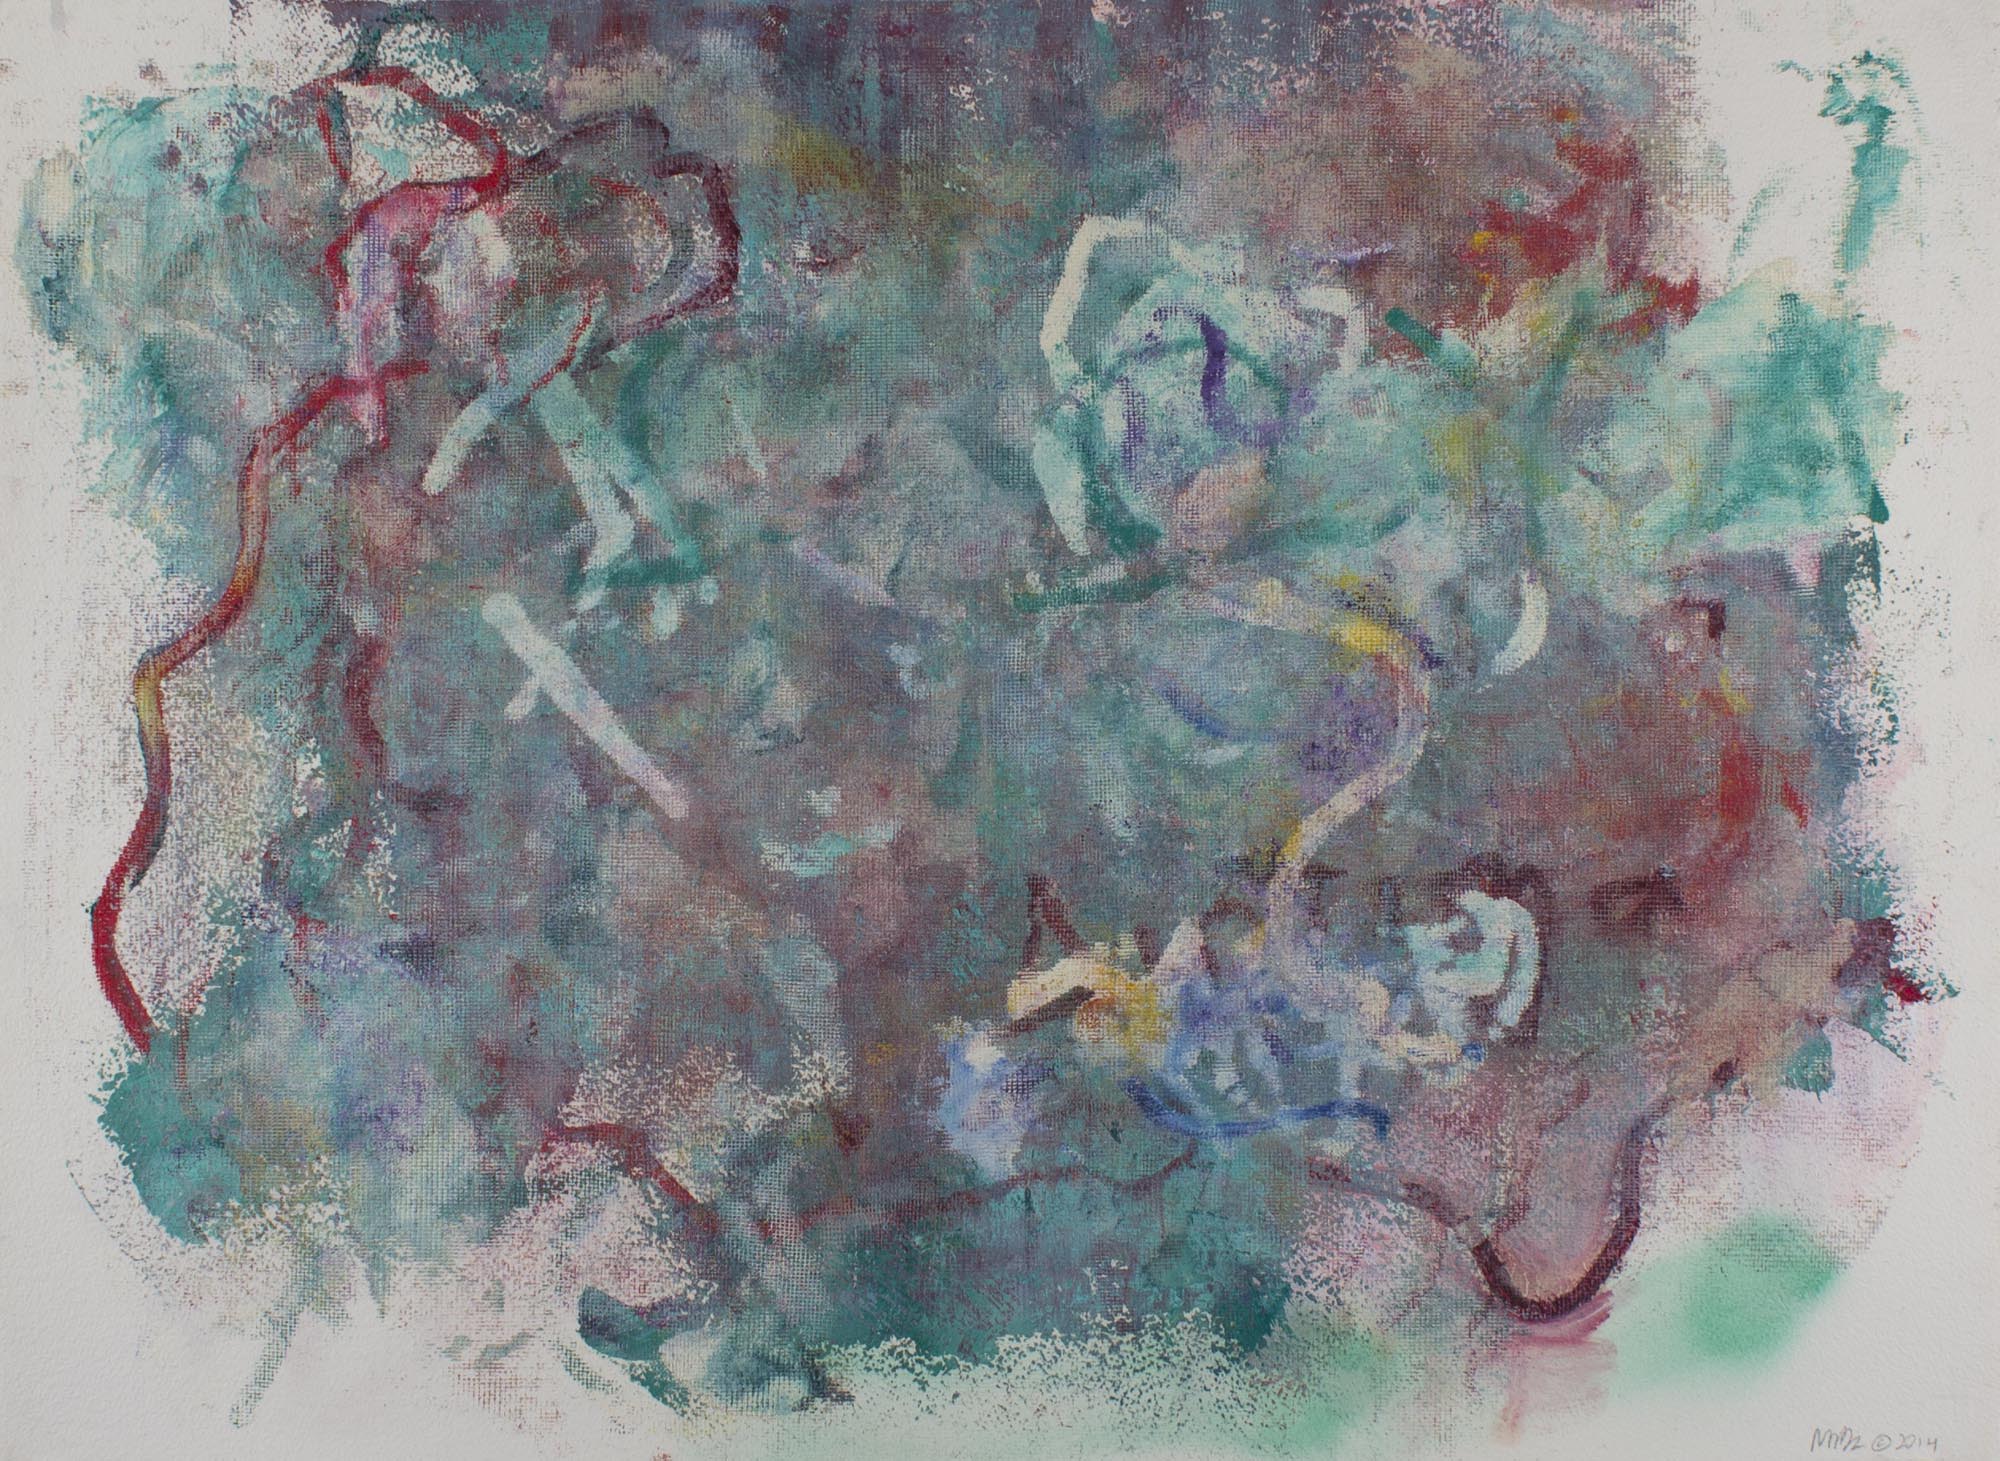    Diotima , 2015   Oil on paper  22 x 30 inches 